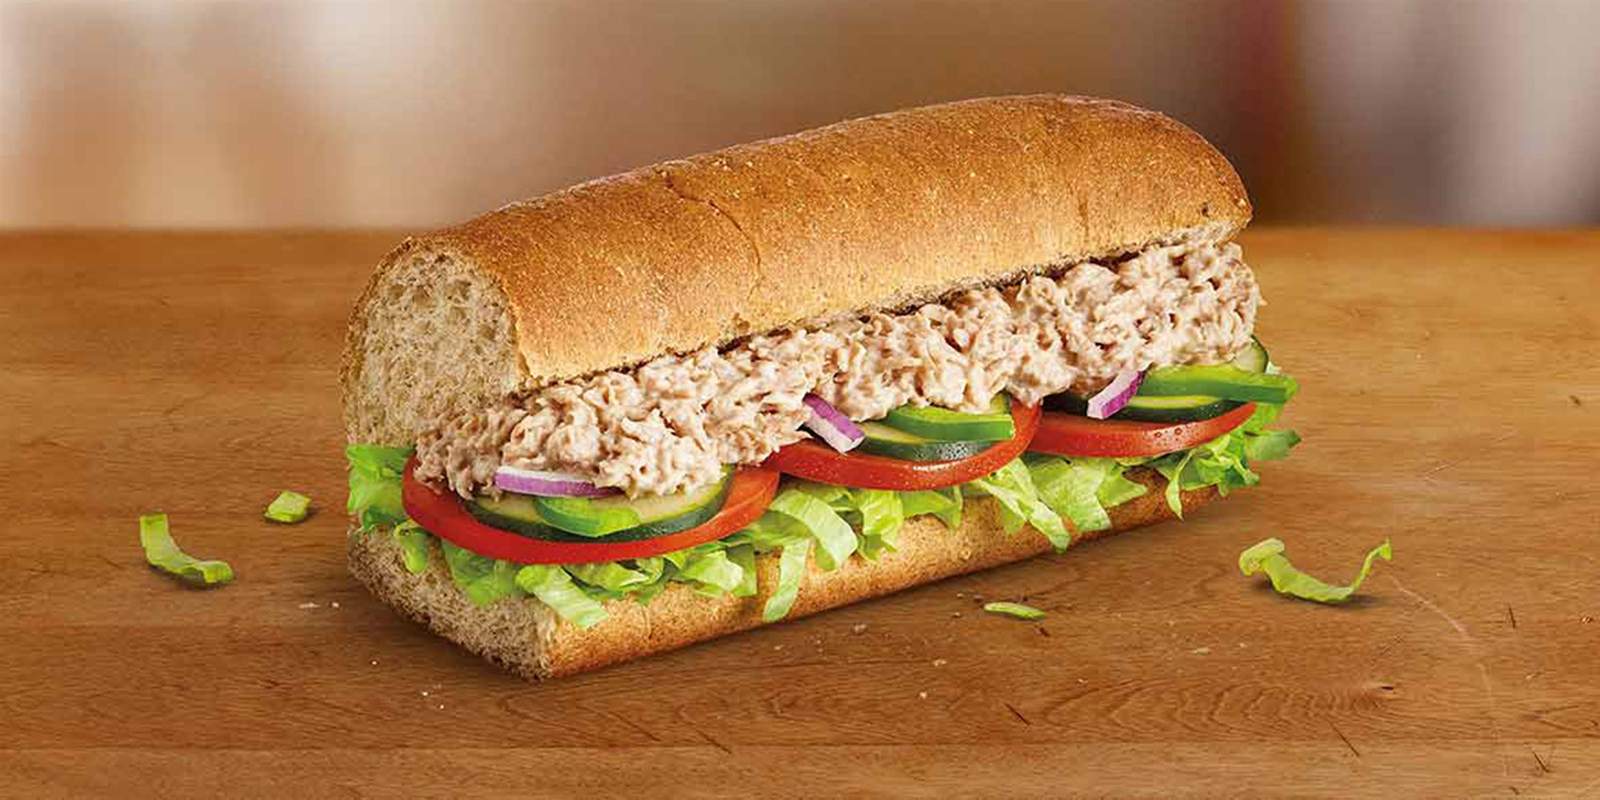 Customers sue Subway, claiming tuna sandwiches don’t actually contain tuna